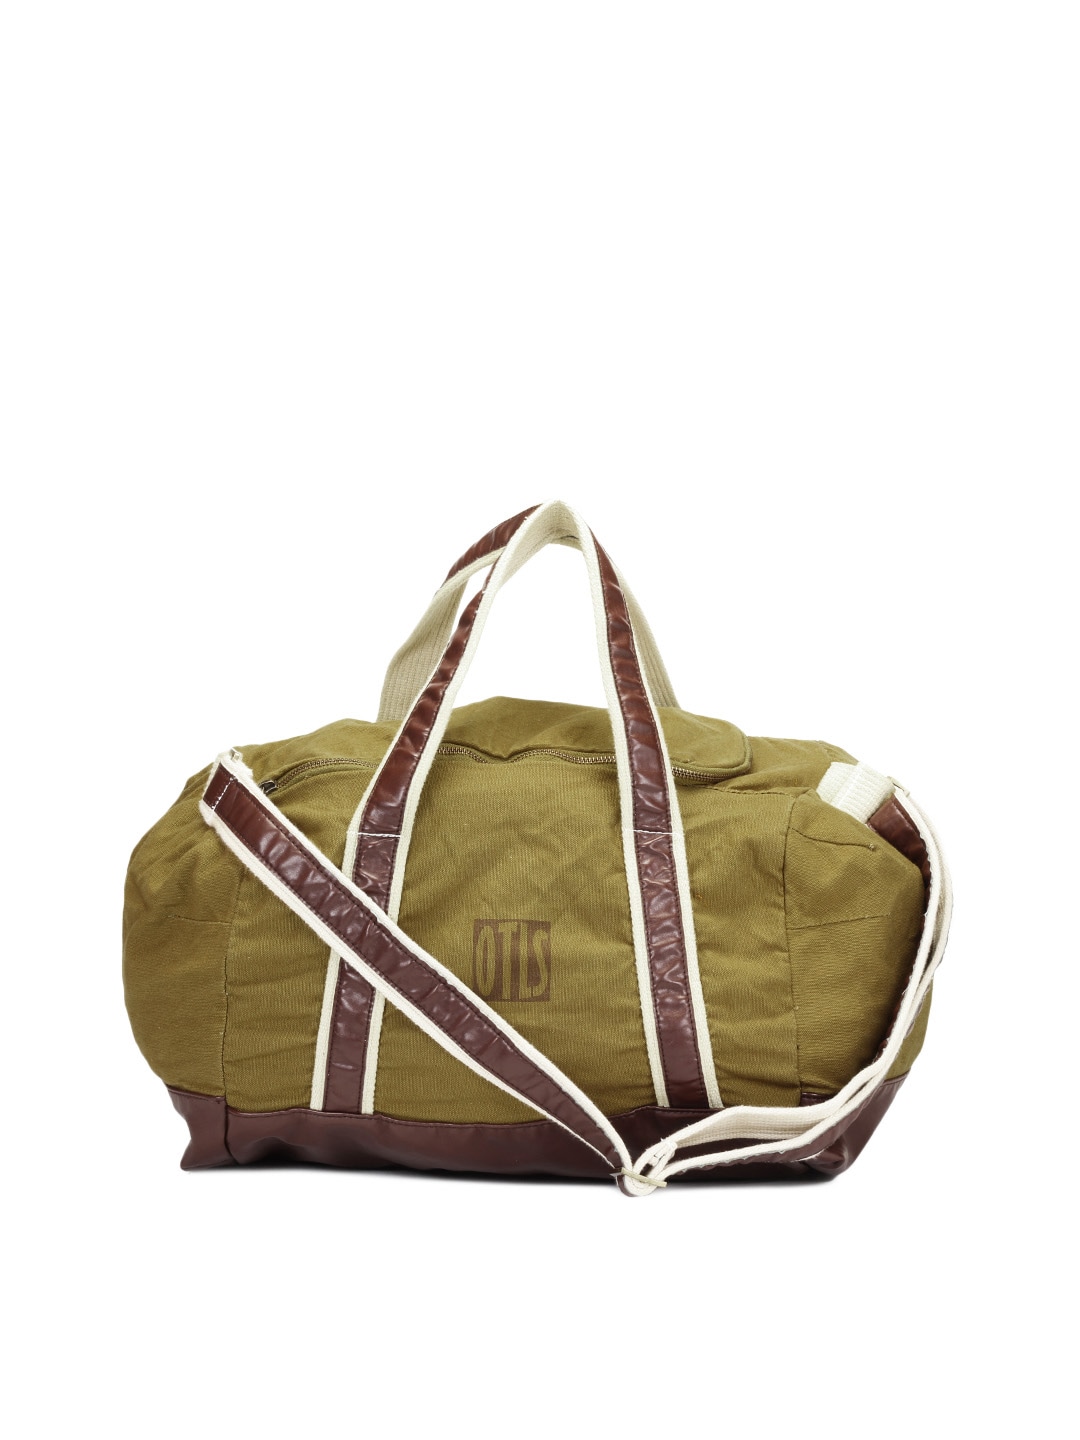 OTLS Unisex Mustard Brown Duffle Bag